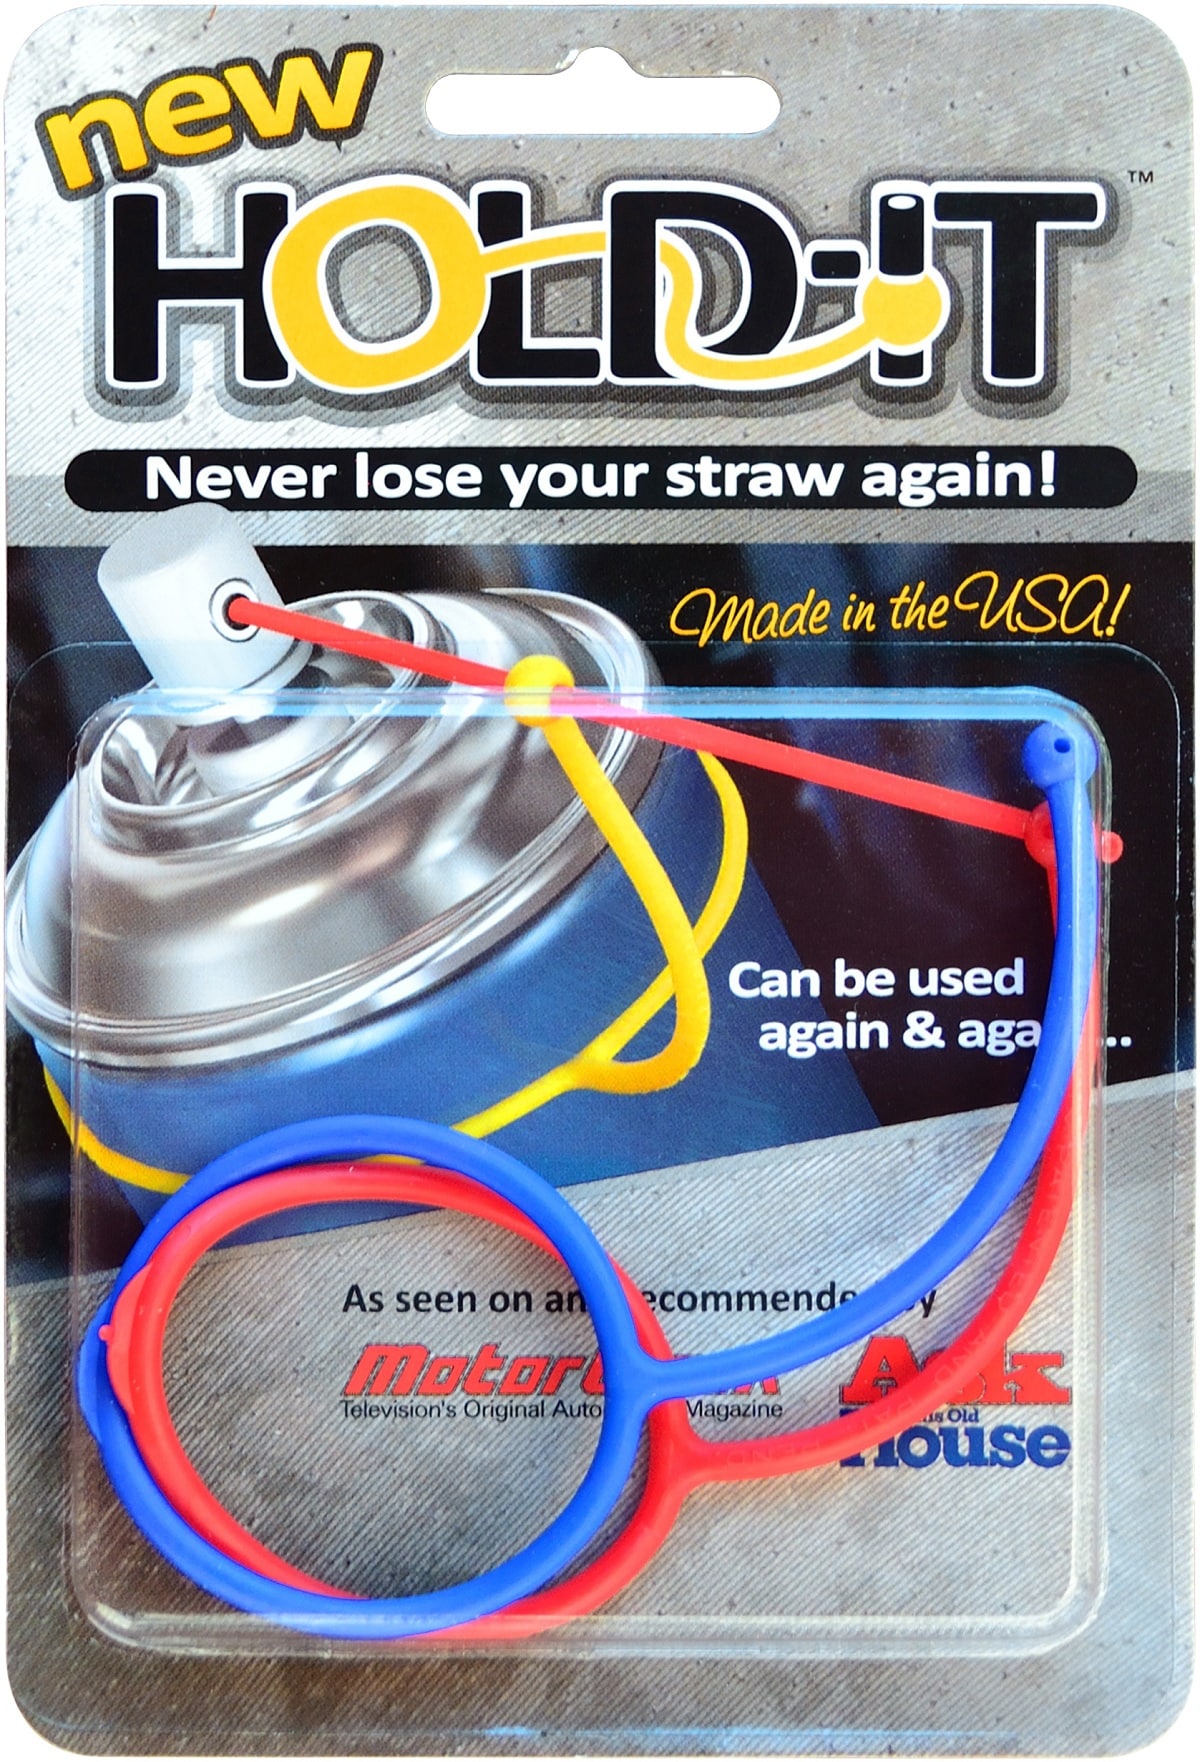 Straw Holder, Straw Holders, Straw Holder Manufacturers, Straws